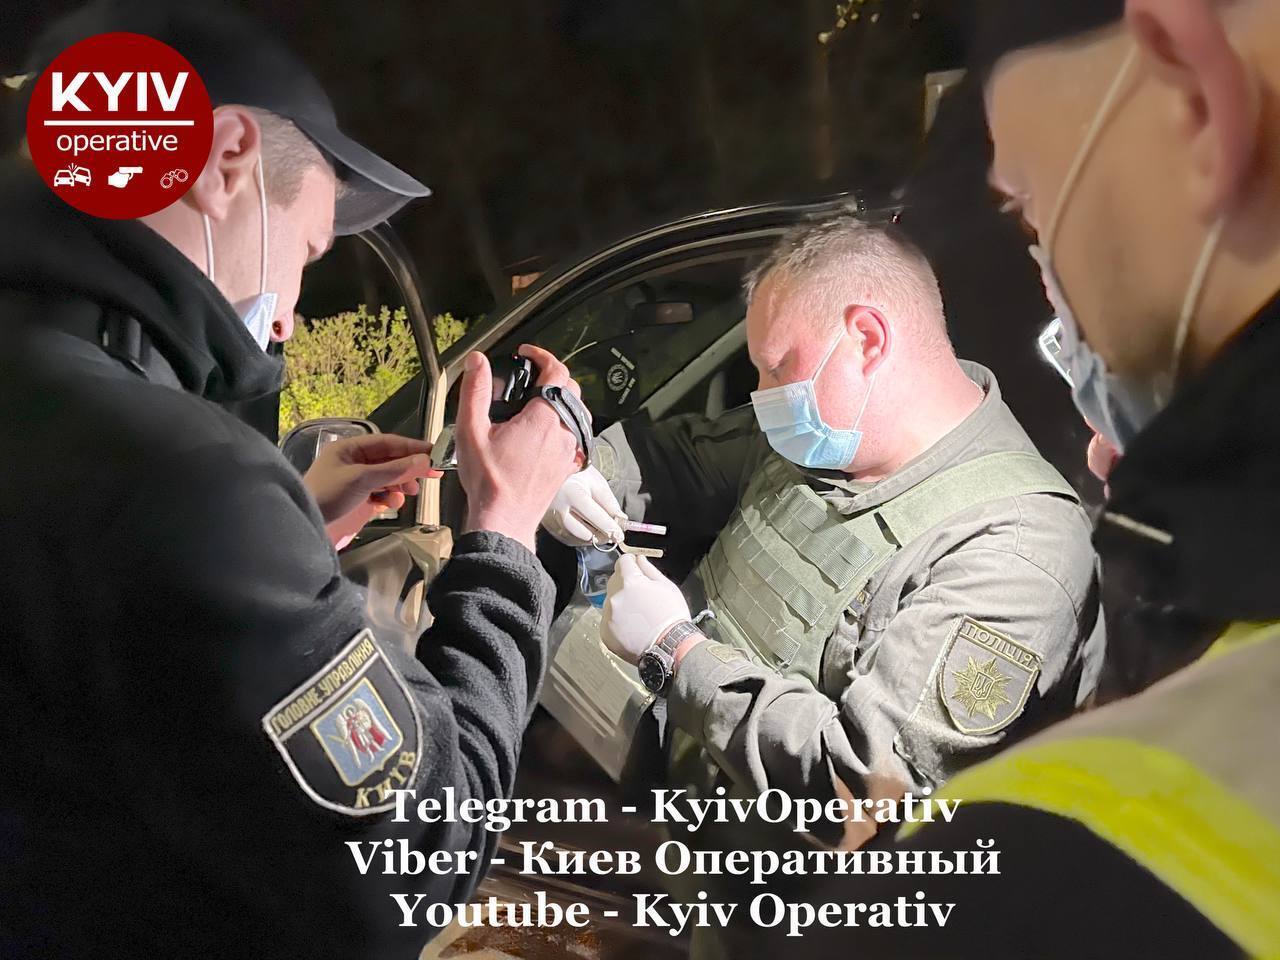 В Киеве задержали нетрезвого водителя без прав с гранатой в авто. Фото